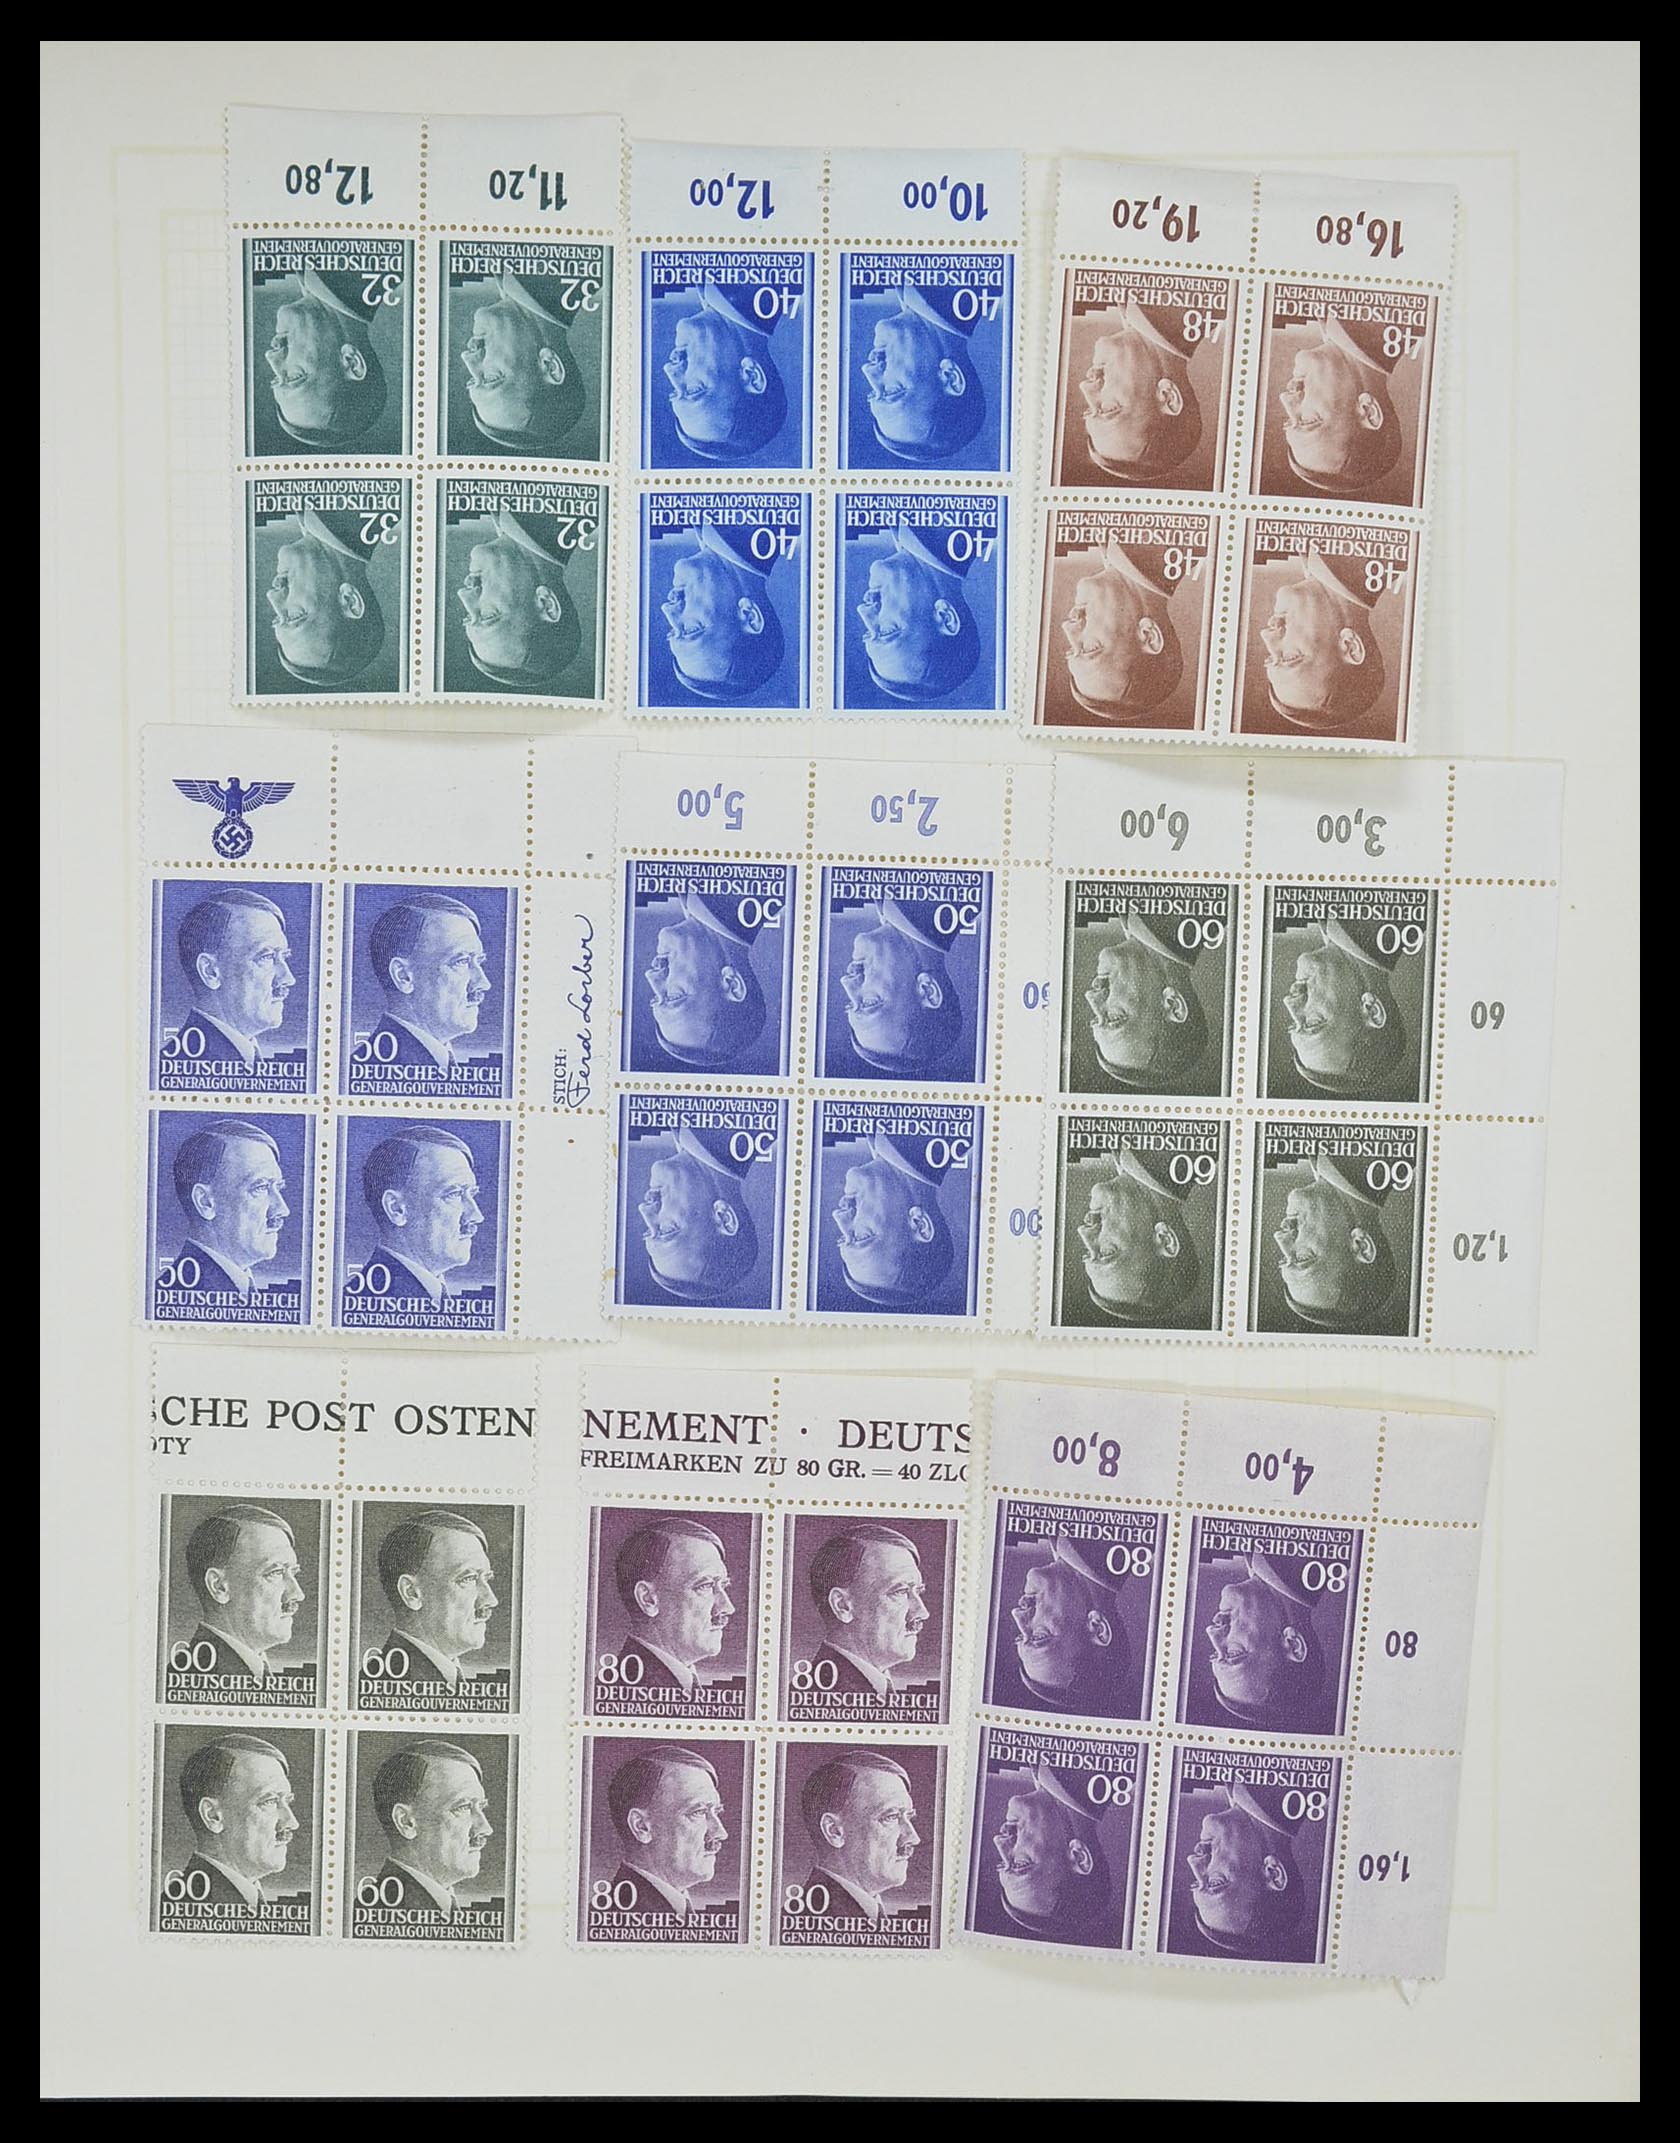 33215 094 - Stamp collection 33215 German Reich 1920-1945.